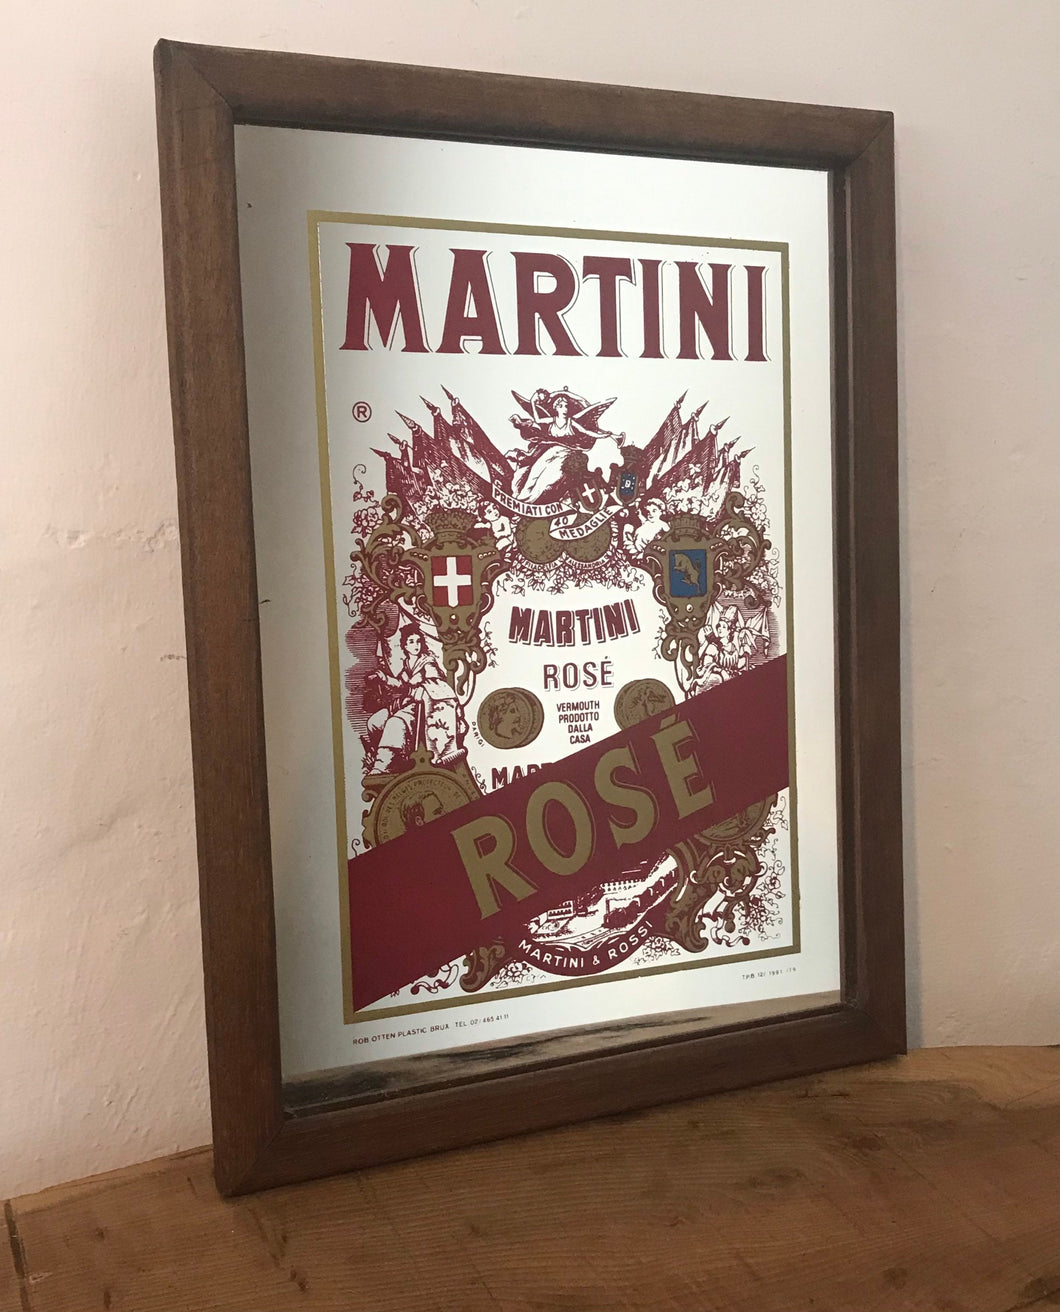 Martini rose vintage advertising mirror art deco Italian liquor drinks spirit collectibles